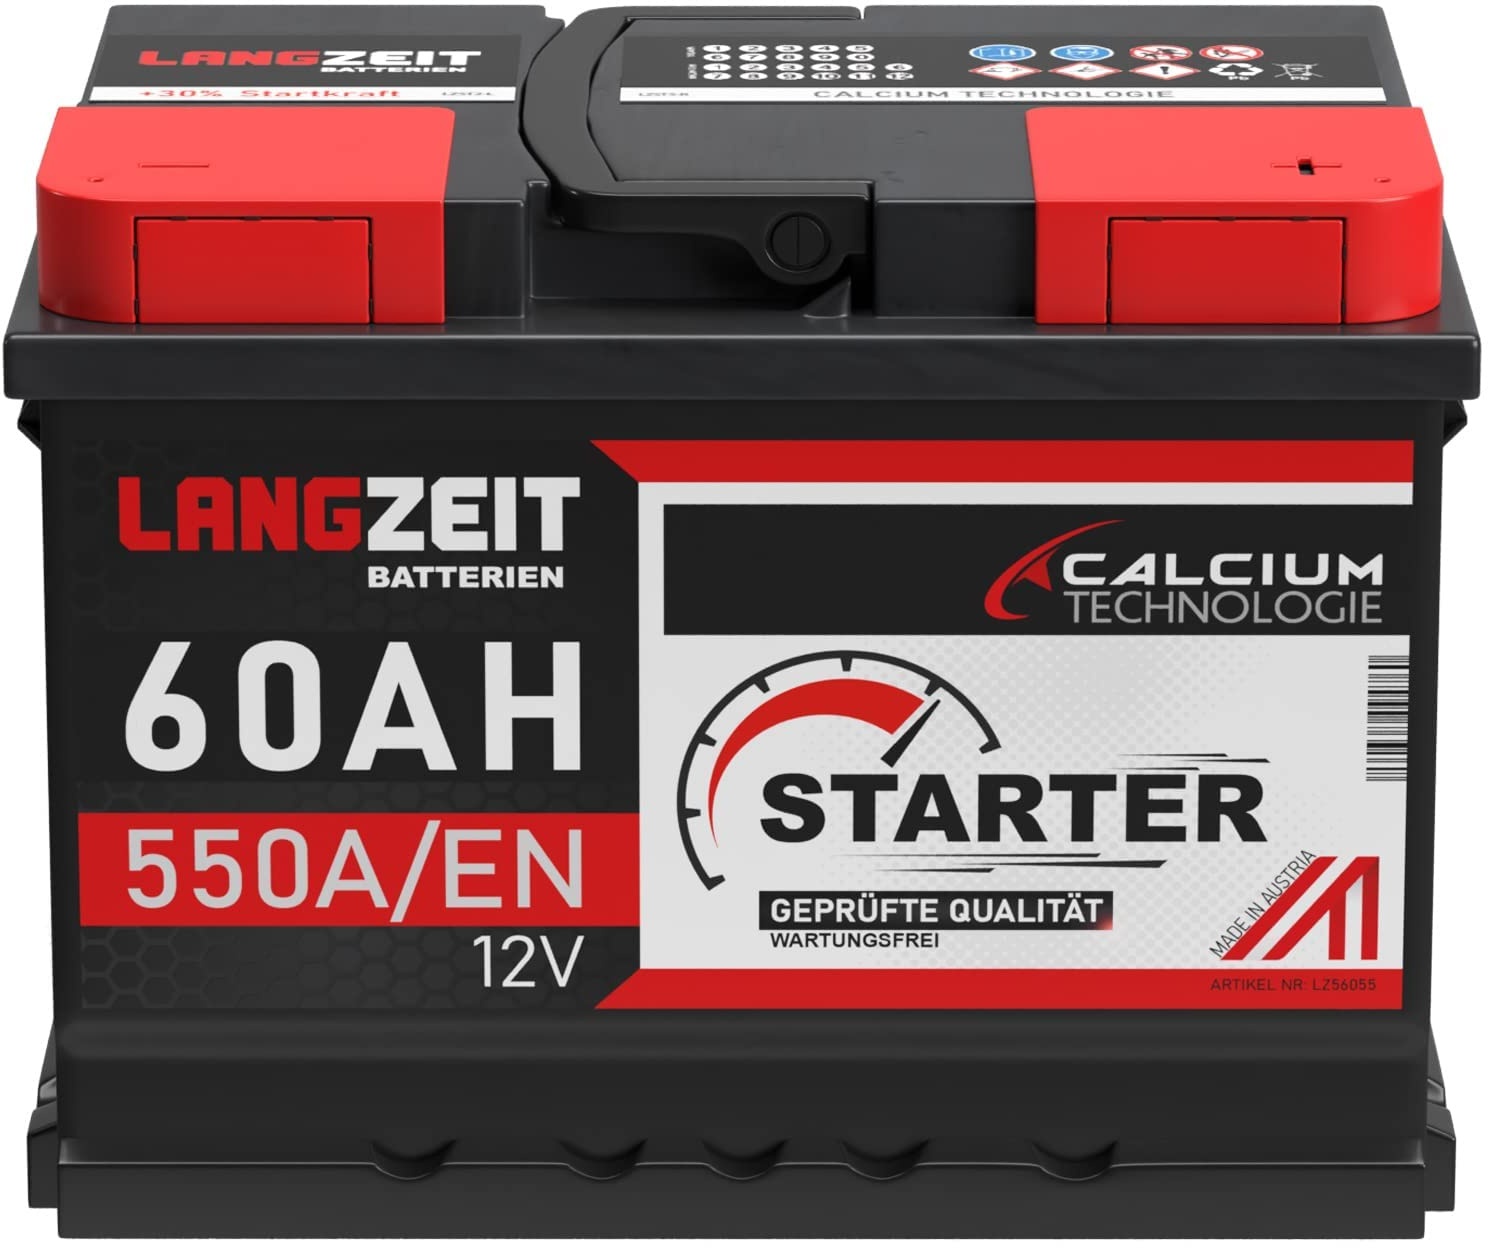 LANGZEIT lead acid, Autobatterie, Kompatibel mit PKW, 60AH 12V 550A/EN Starterbatterie +30% mehr Leistung ersetzt Batterie 55AH 53AH 54AH 56AH 61AH 62AH